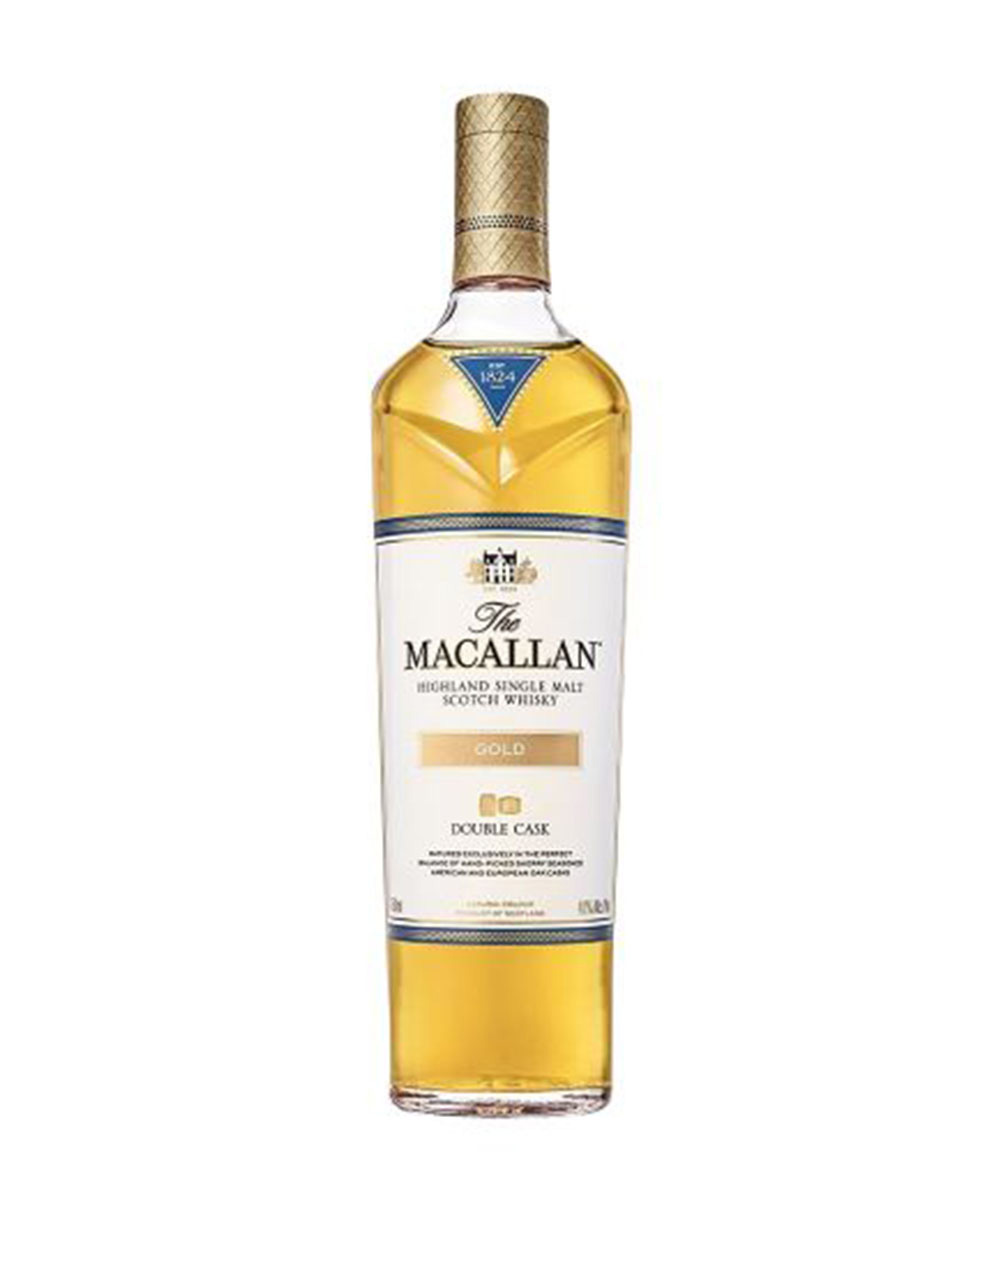 The Macallan Double Cask Gold Single Malt Scotch Whisky